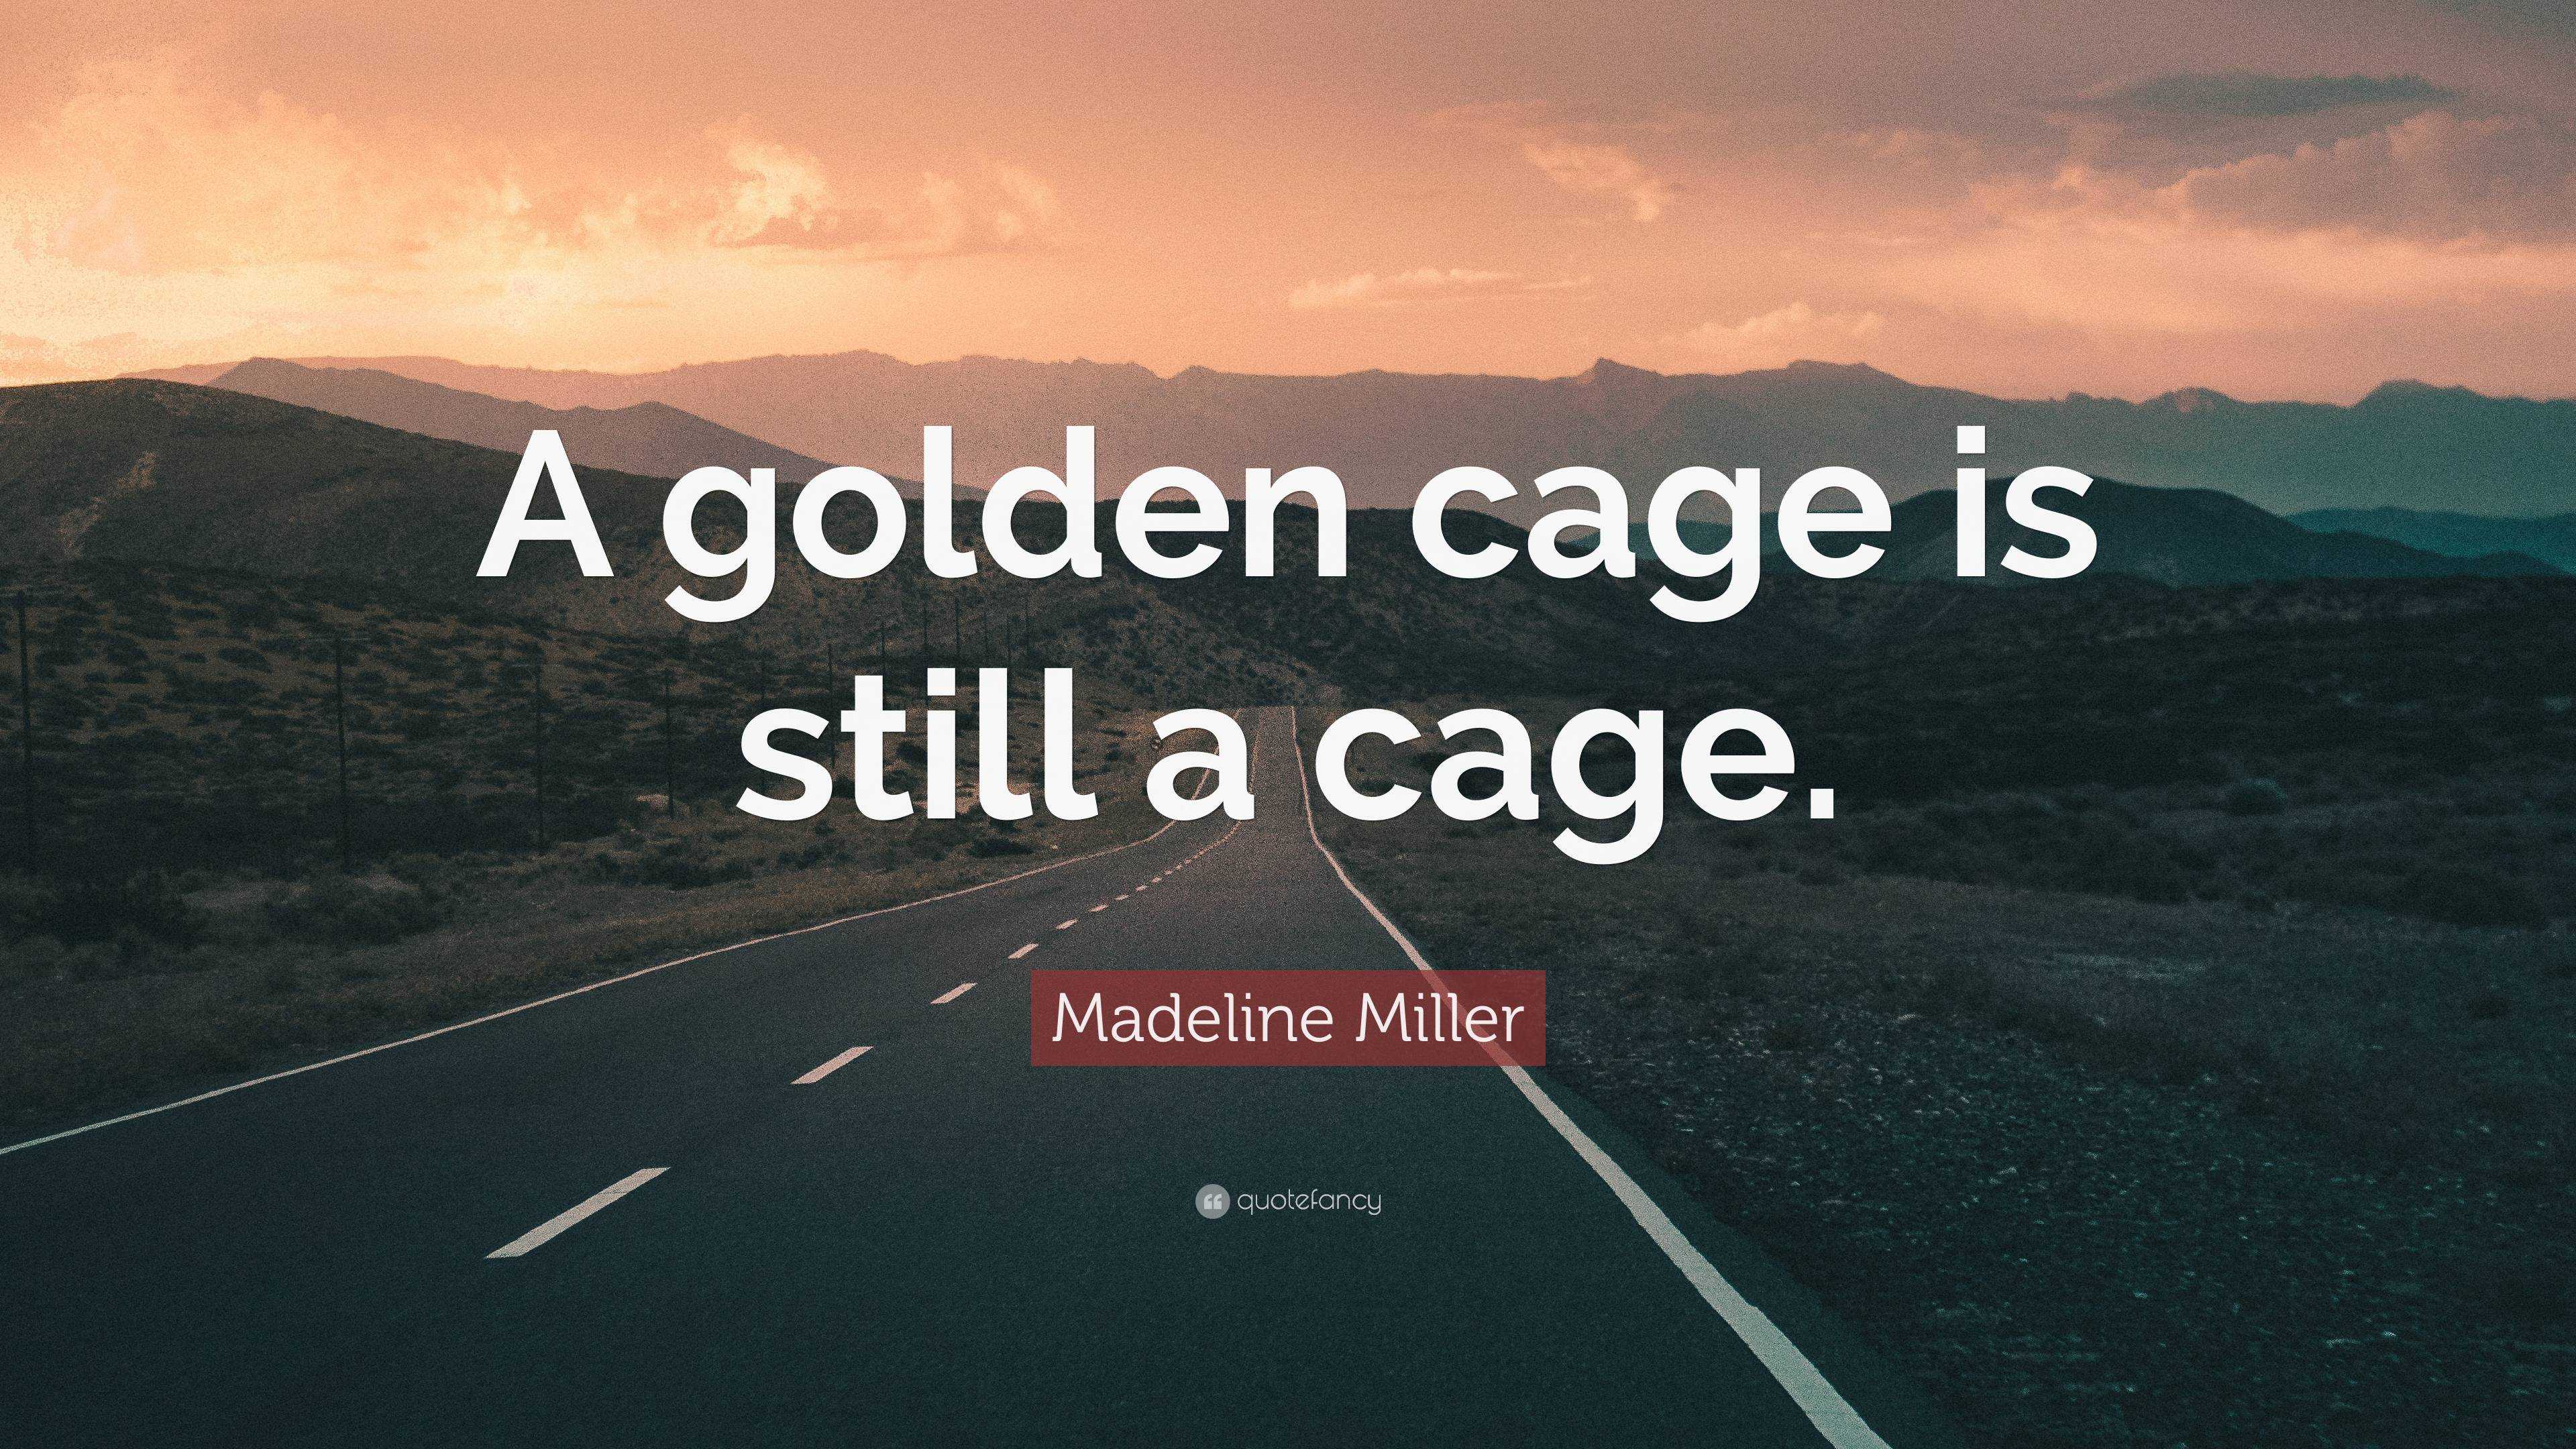 Henholdsvis Hejse Gammel mand Madeline Miller Quote: “A golden cage is still a cage.”